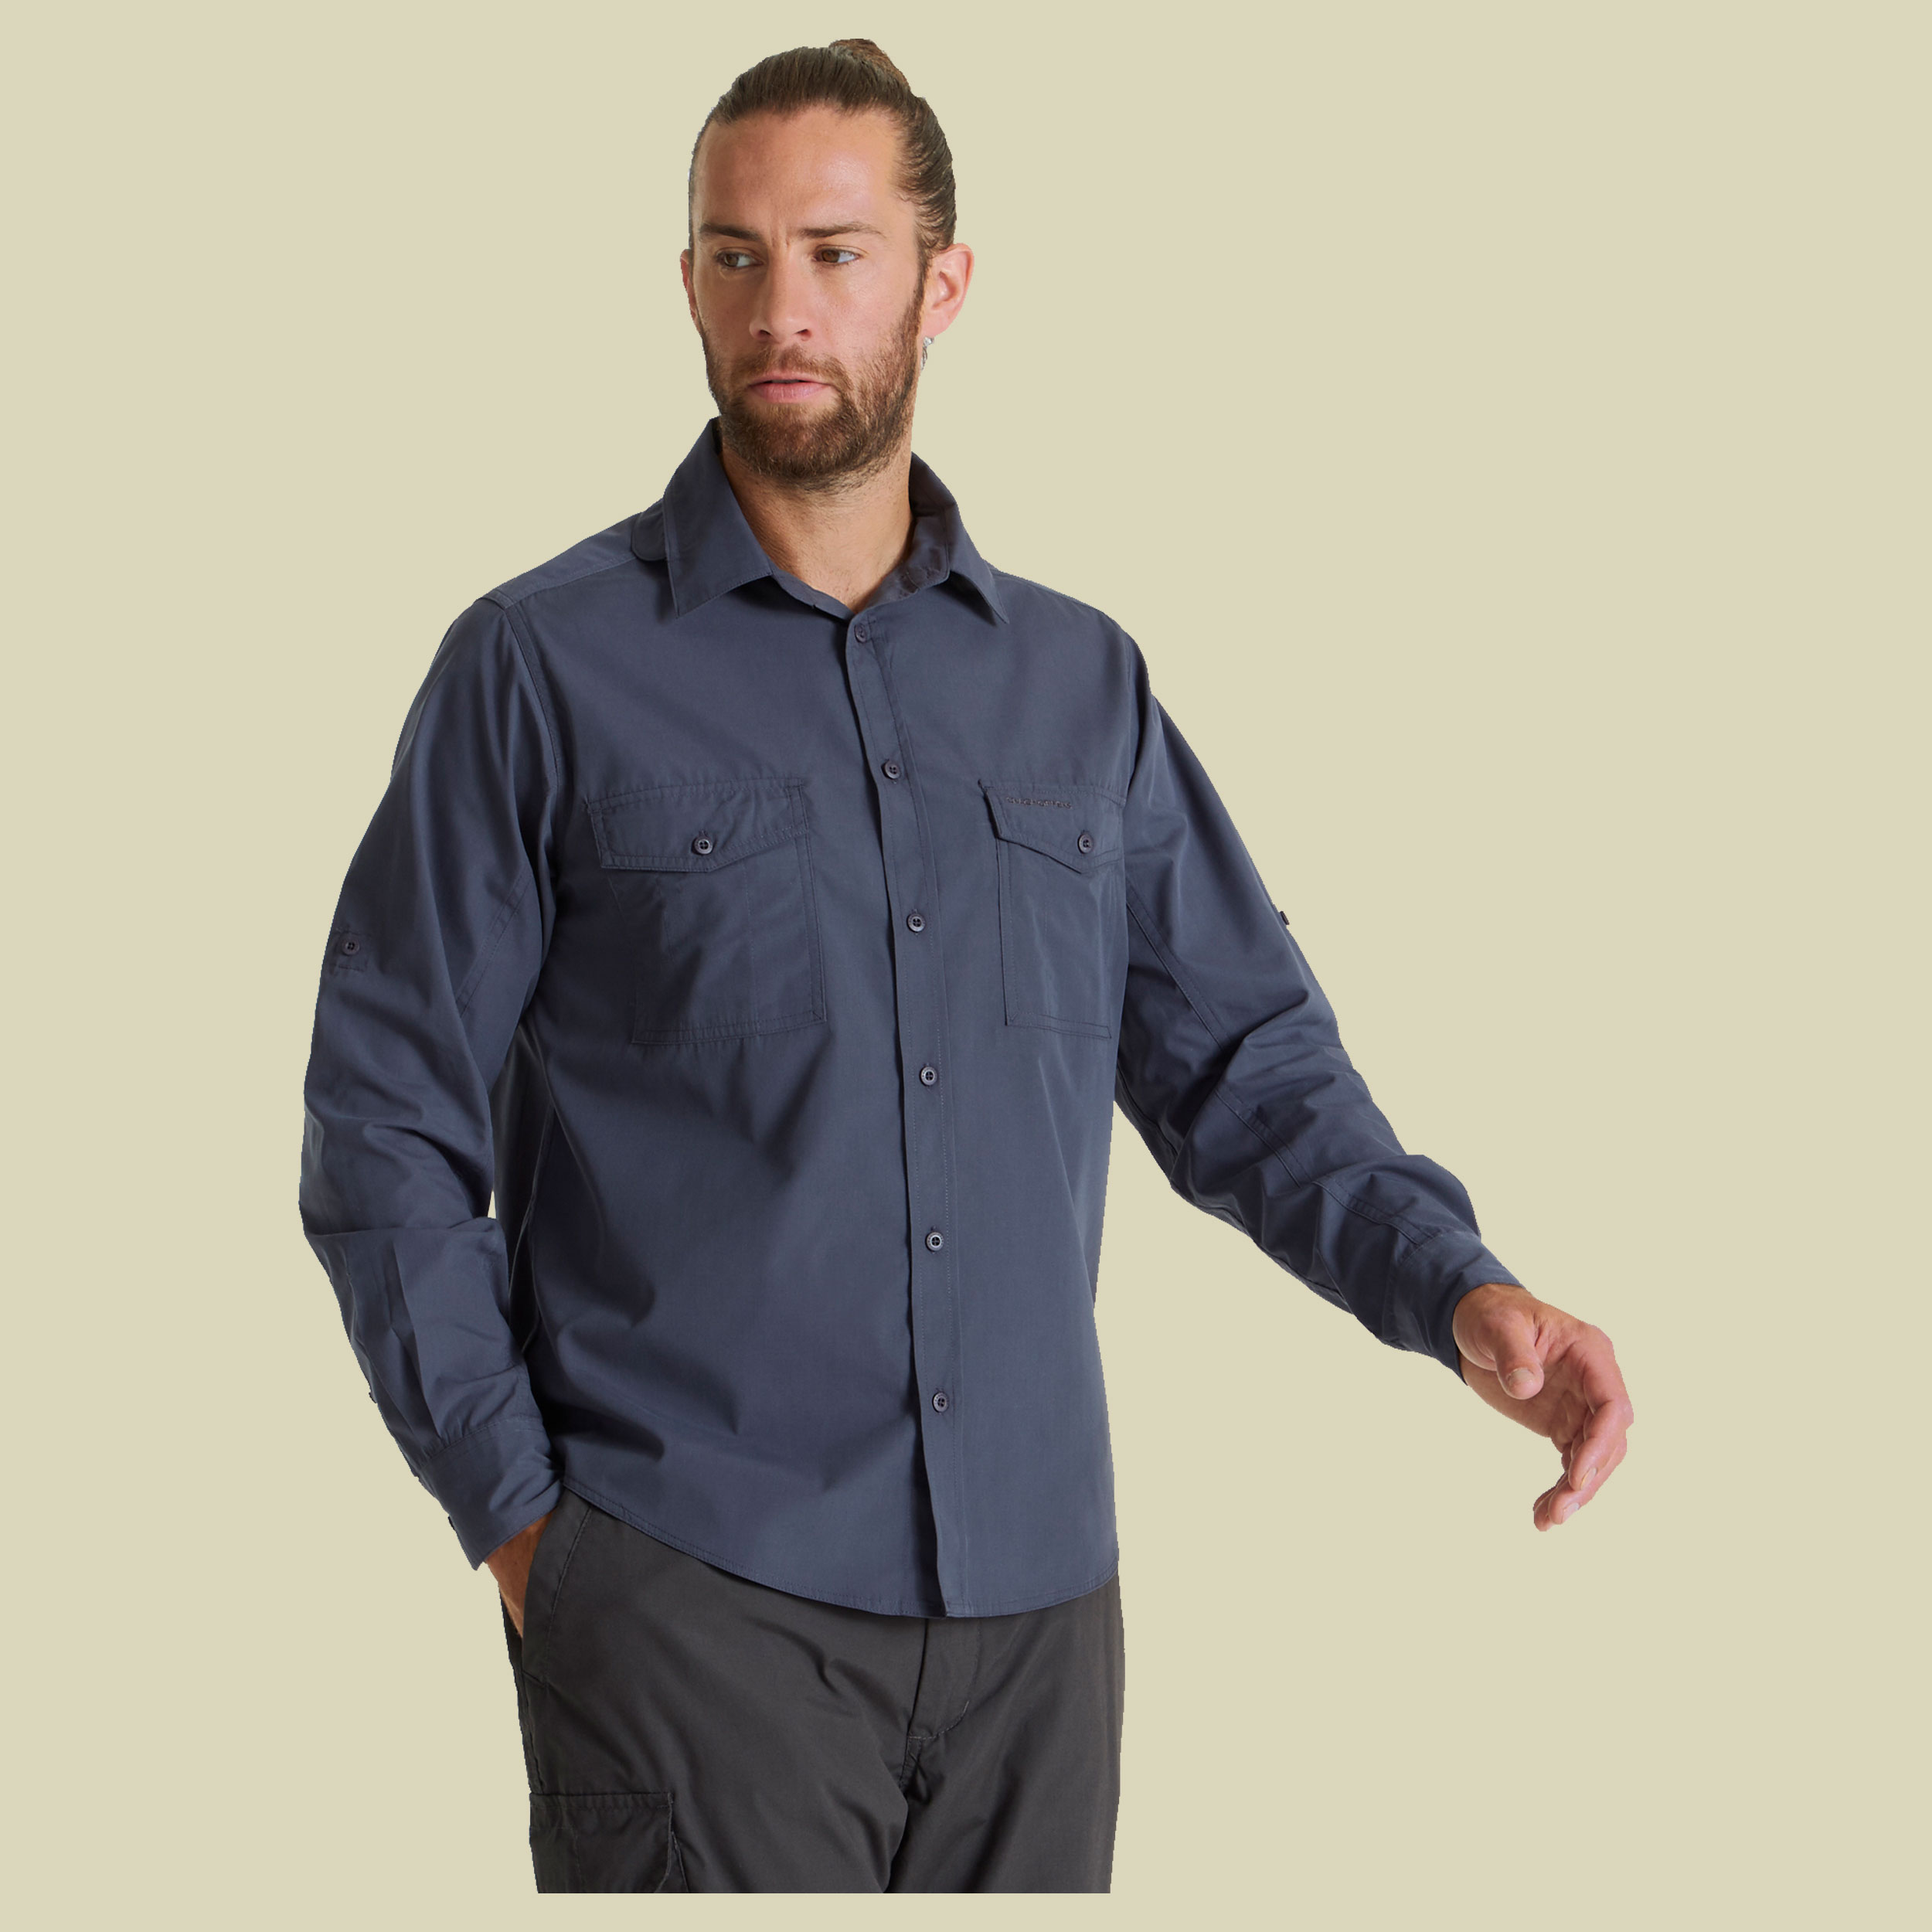 Kiwi Long Sleeved Shirt Men blau L - ombre blue